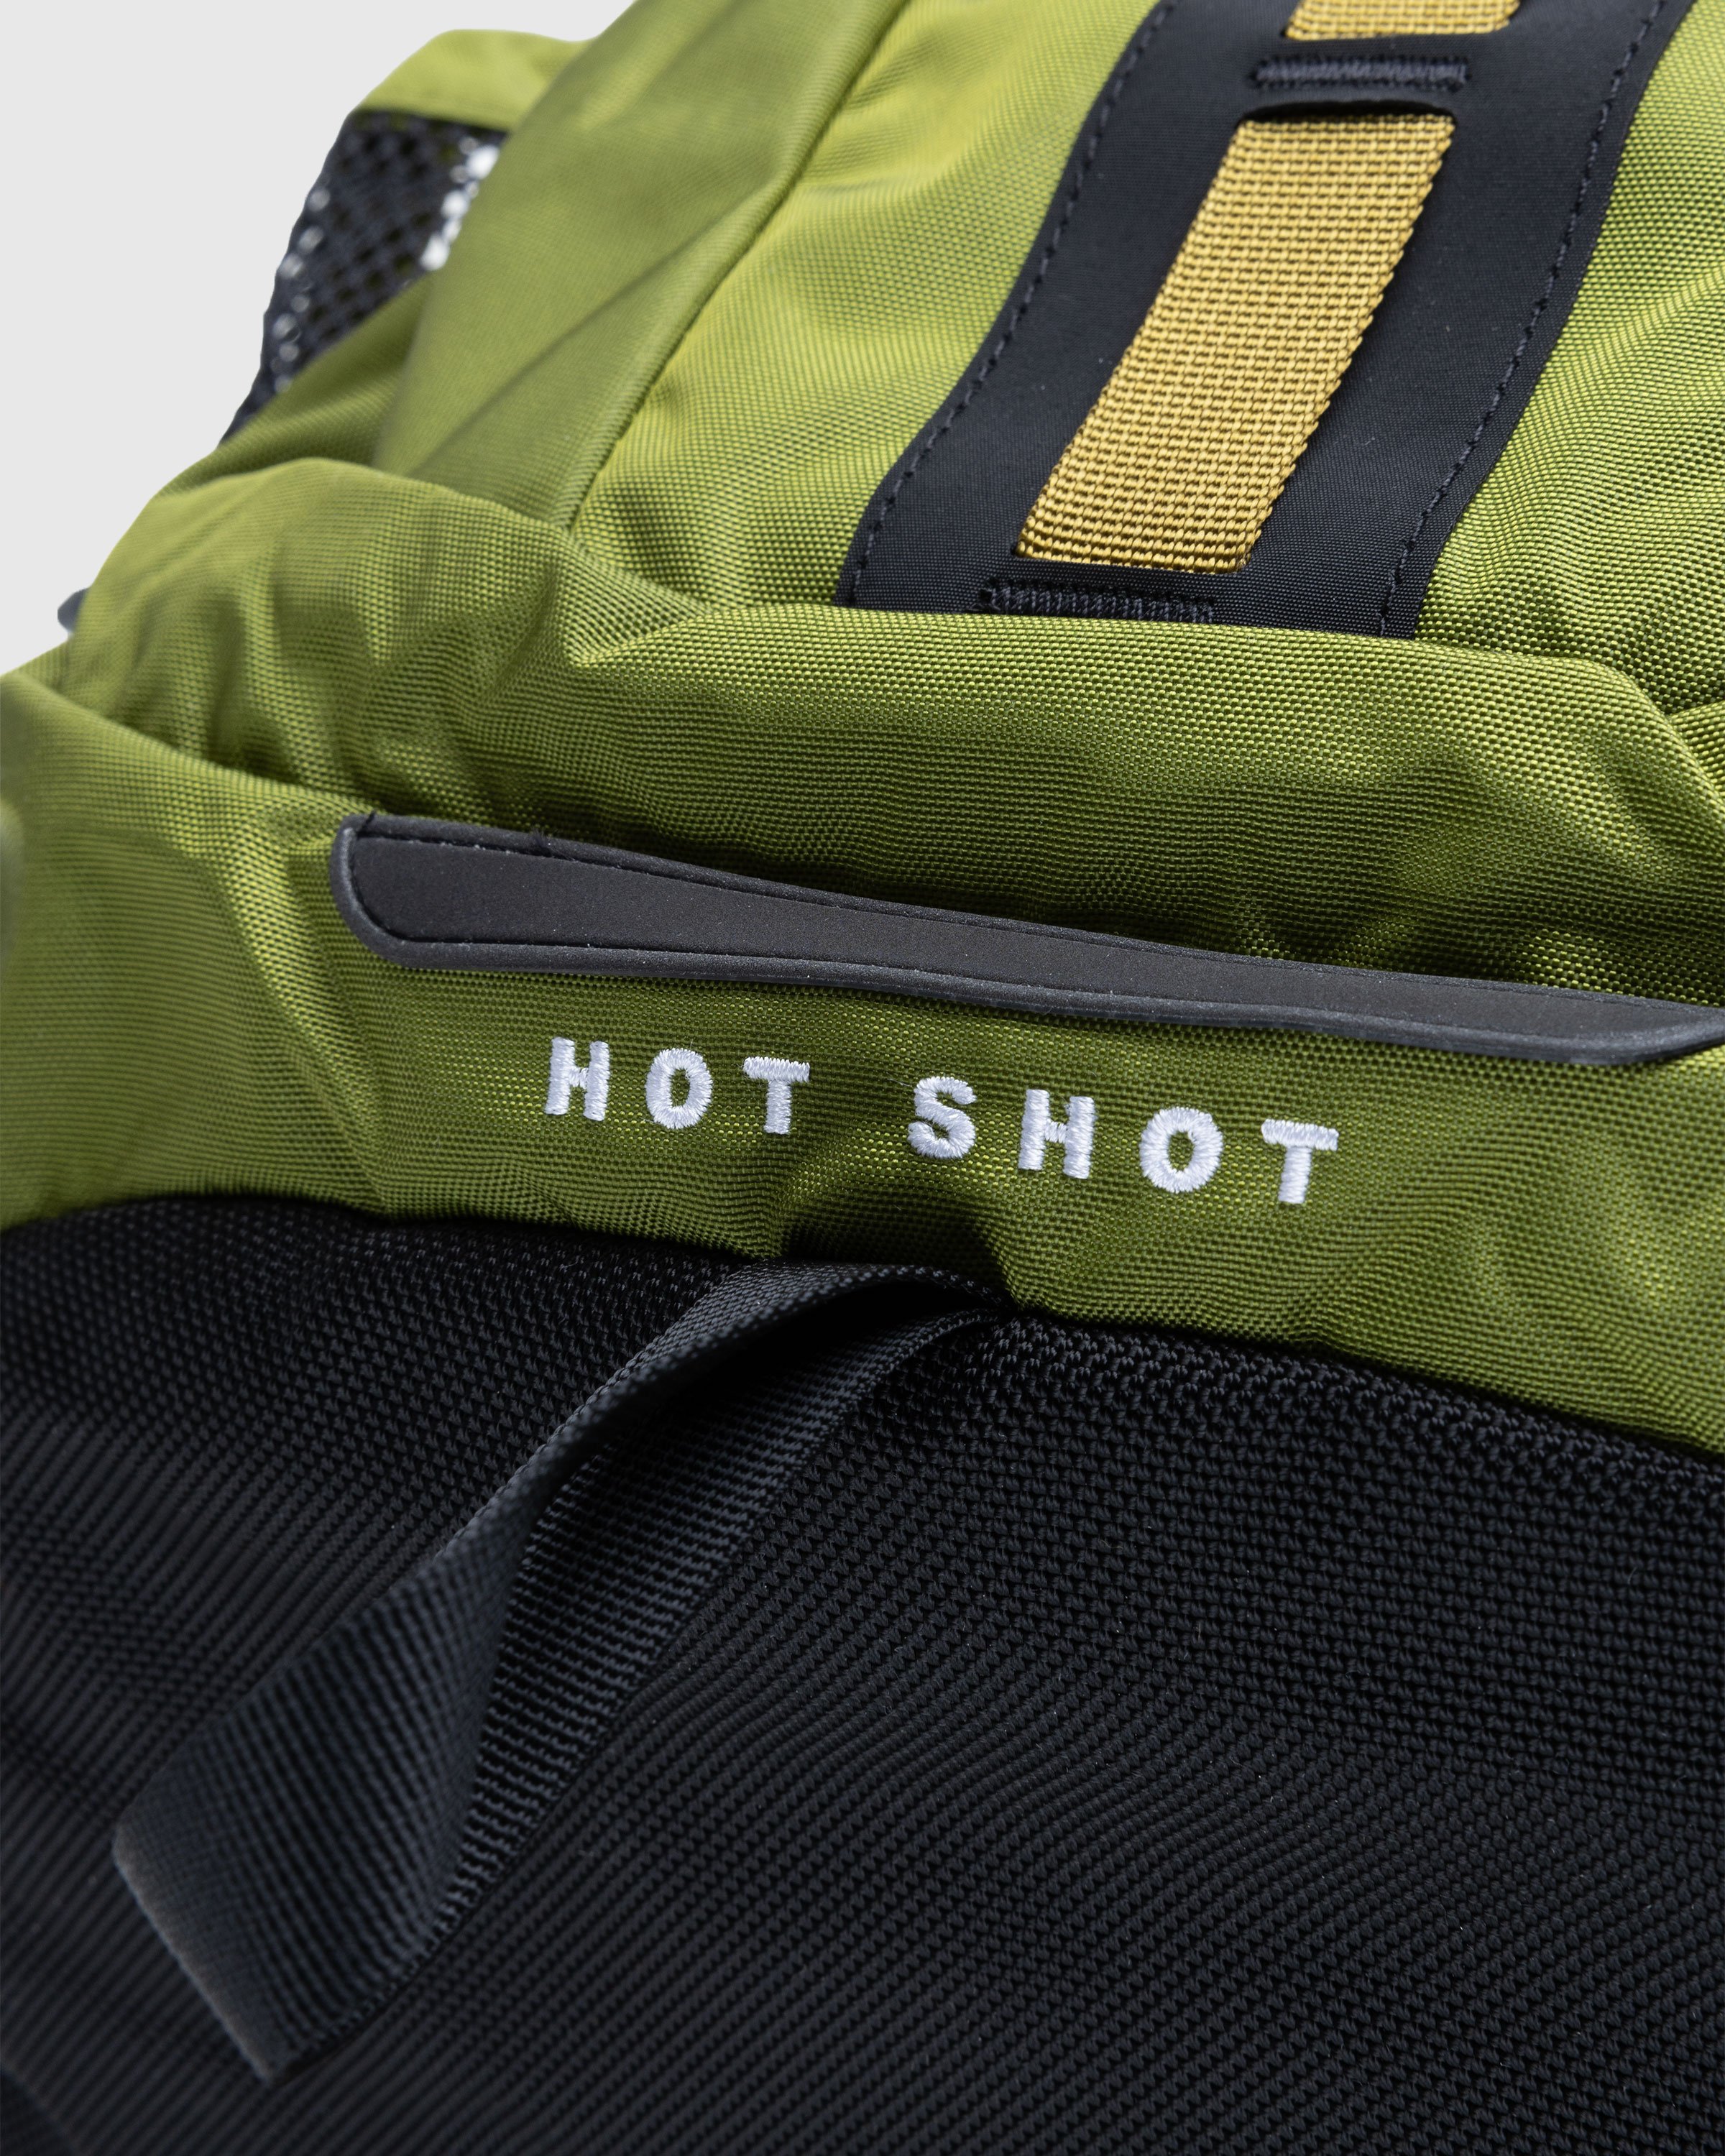 The North Face - Hot Shot Backpack Calla Green/Fir Green - Accessories - Green - Image 6